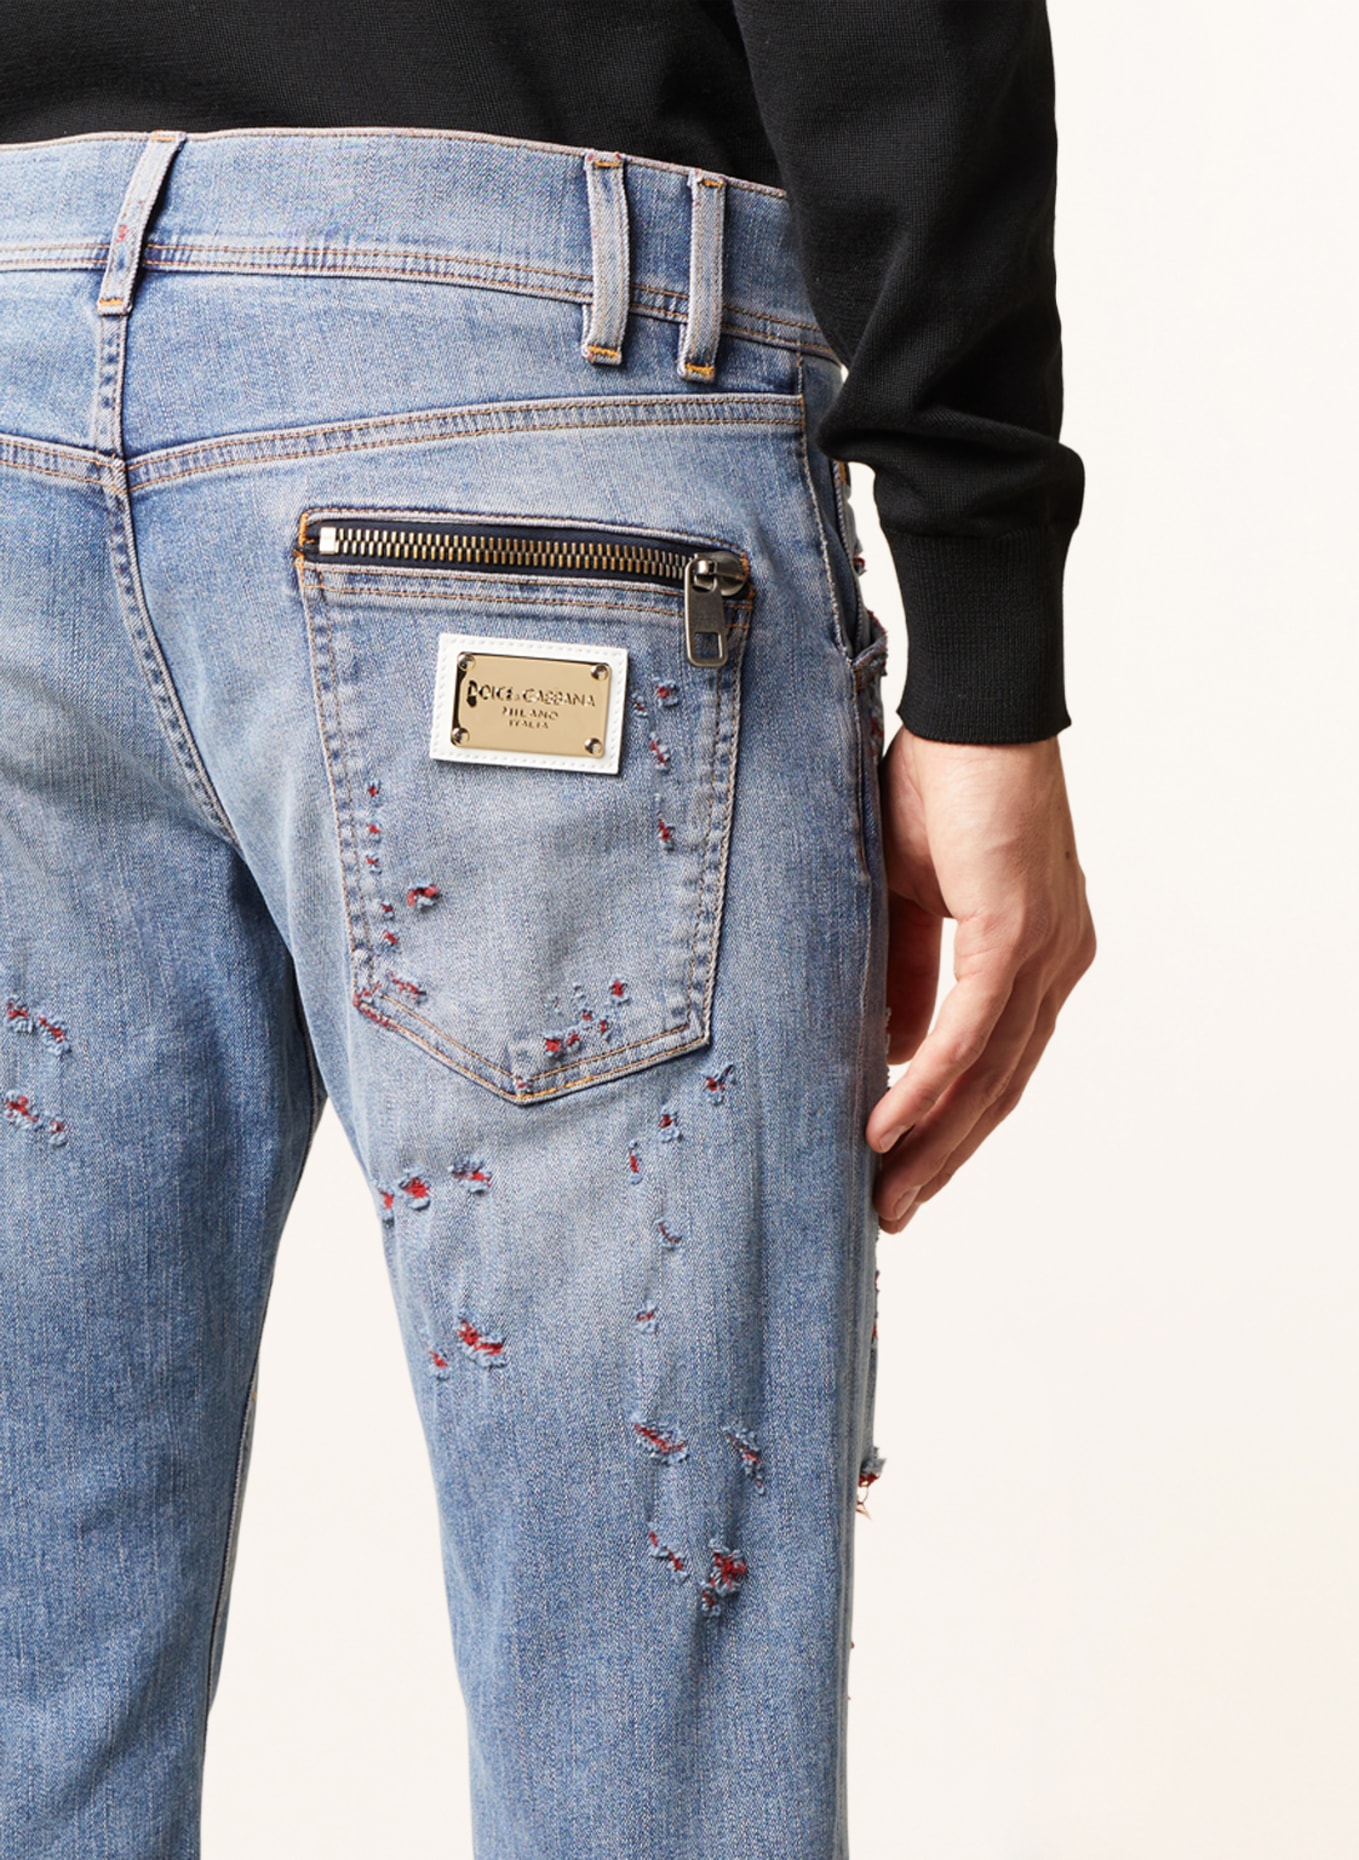 DOLCE & GABBANA Destroyed jeans regular fit, Color: S9001 VARIANTE ABBINATA (Image 6)